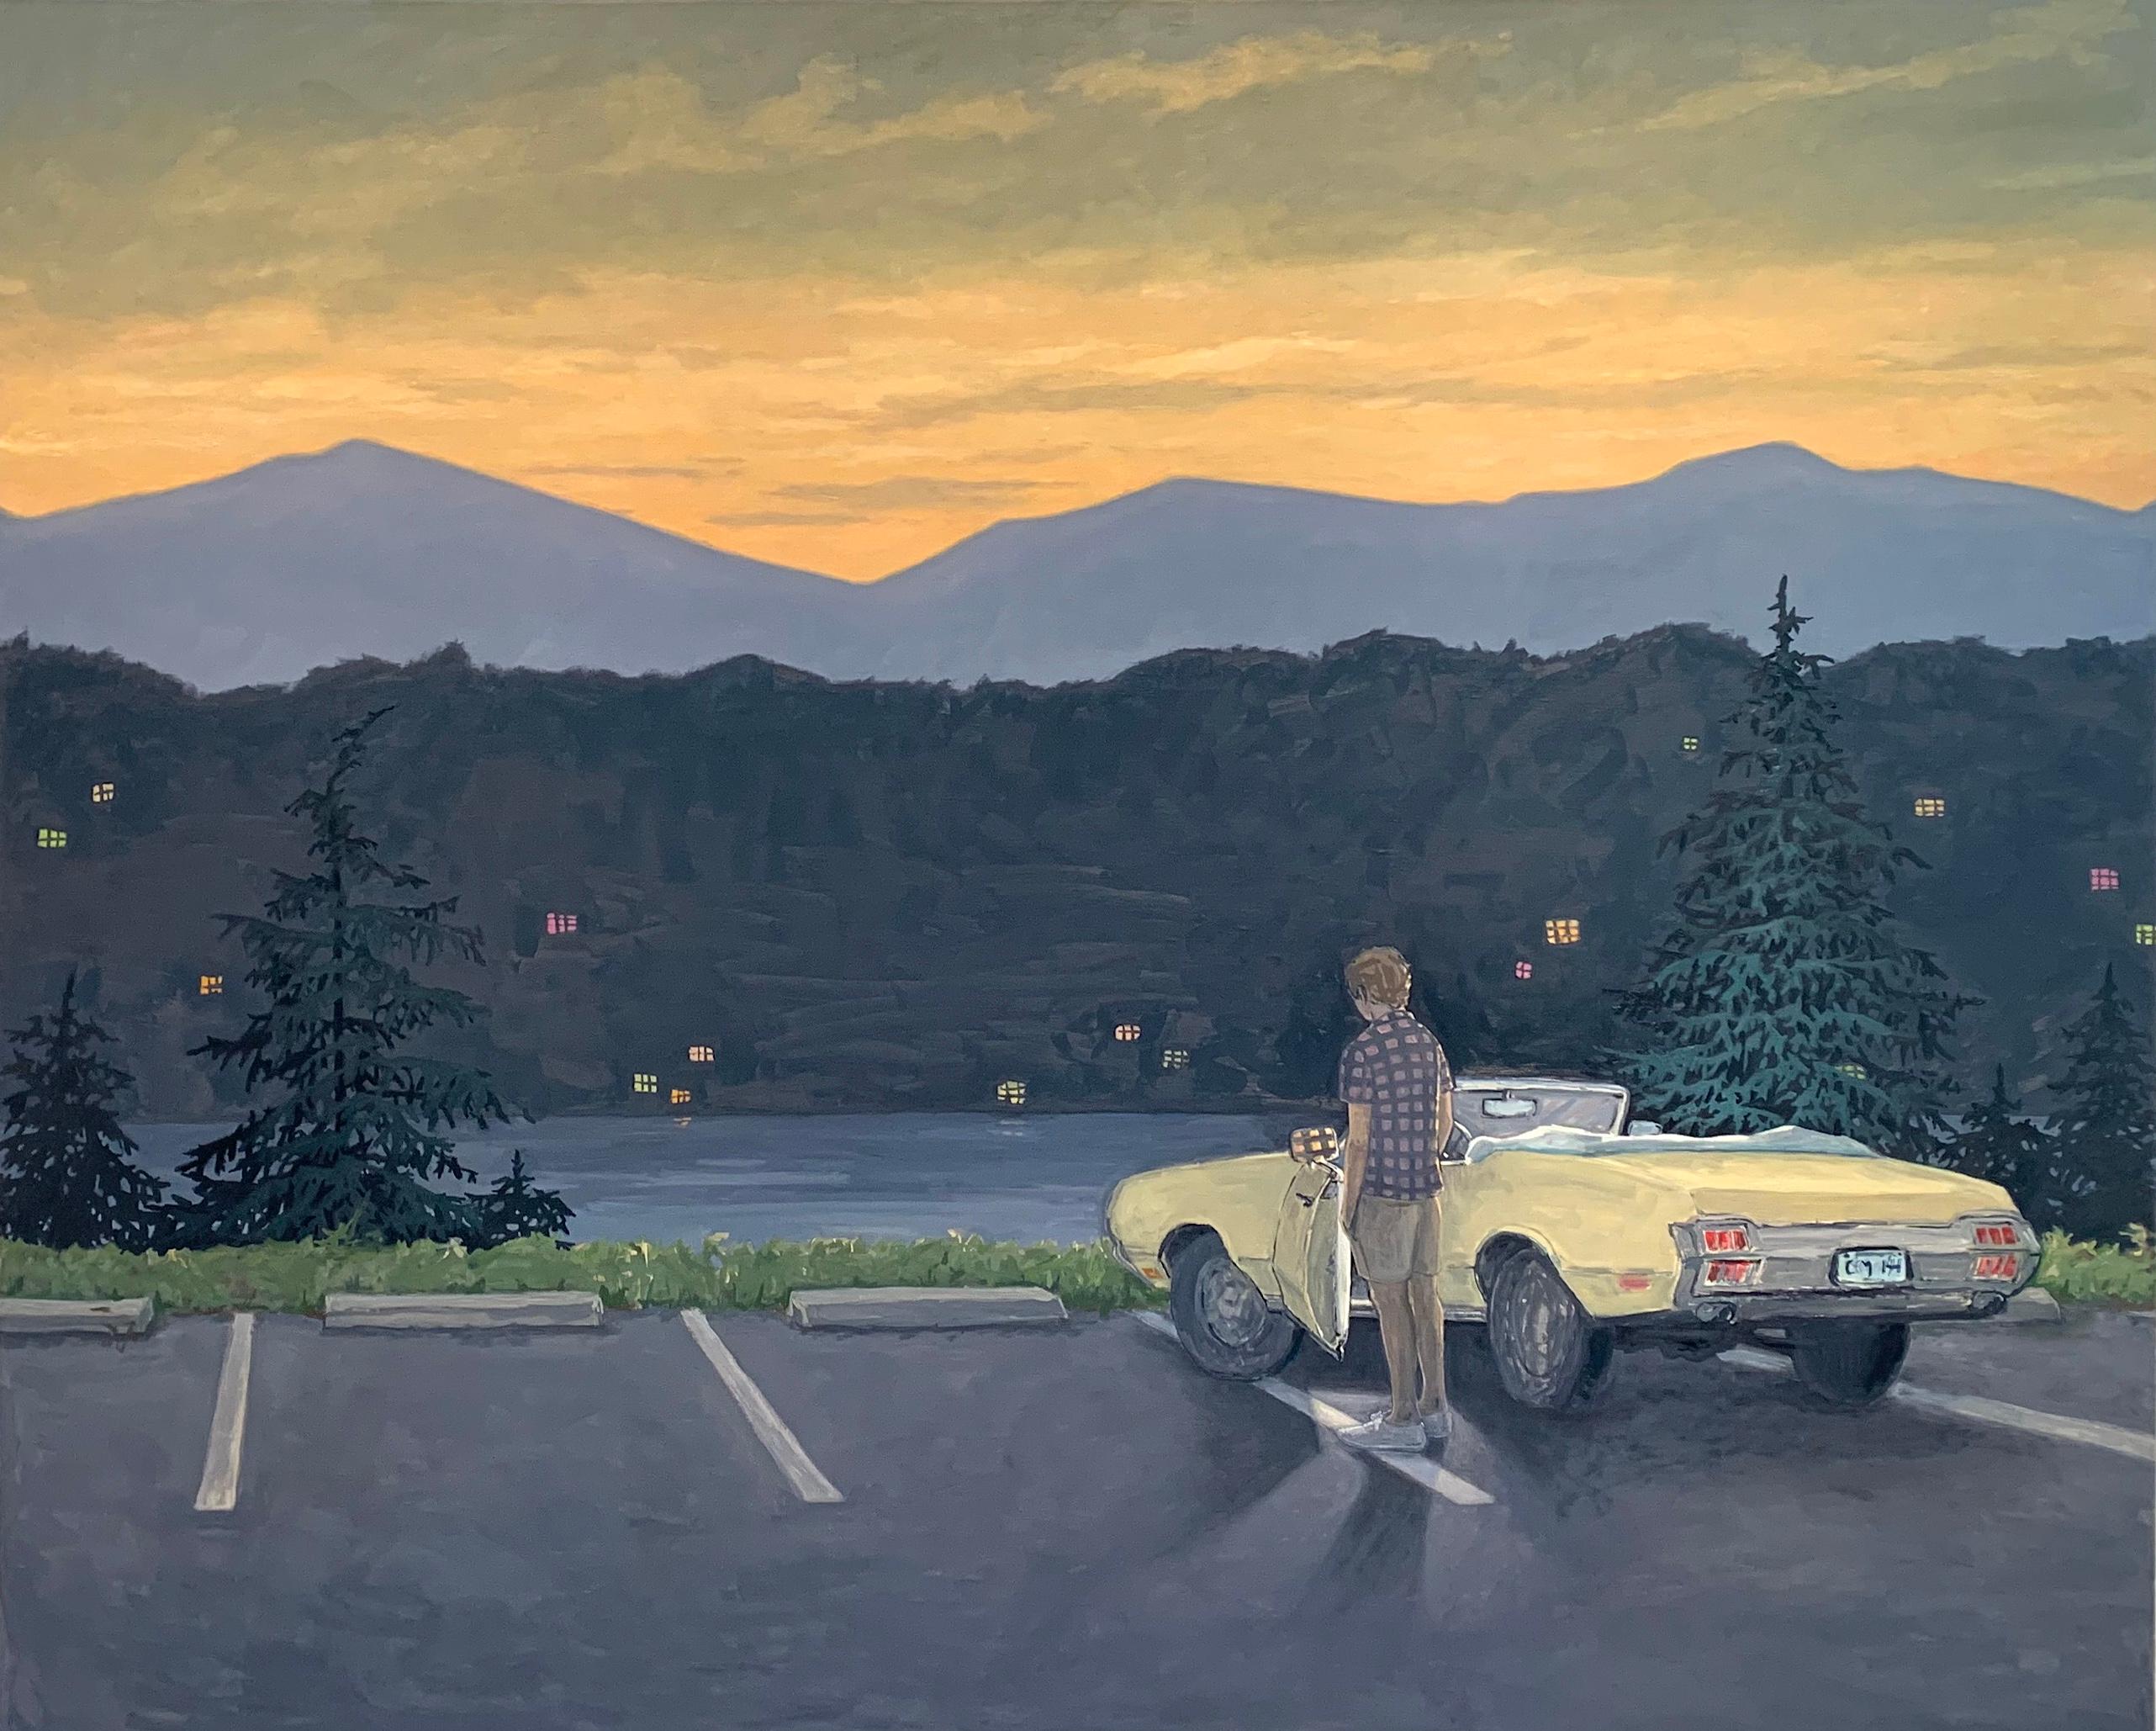 KK Kozik Landscape Painting - Overlook, Figure, Yellow Vintage Car, Mountains, Pine Trees, Lake at Sunset